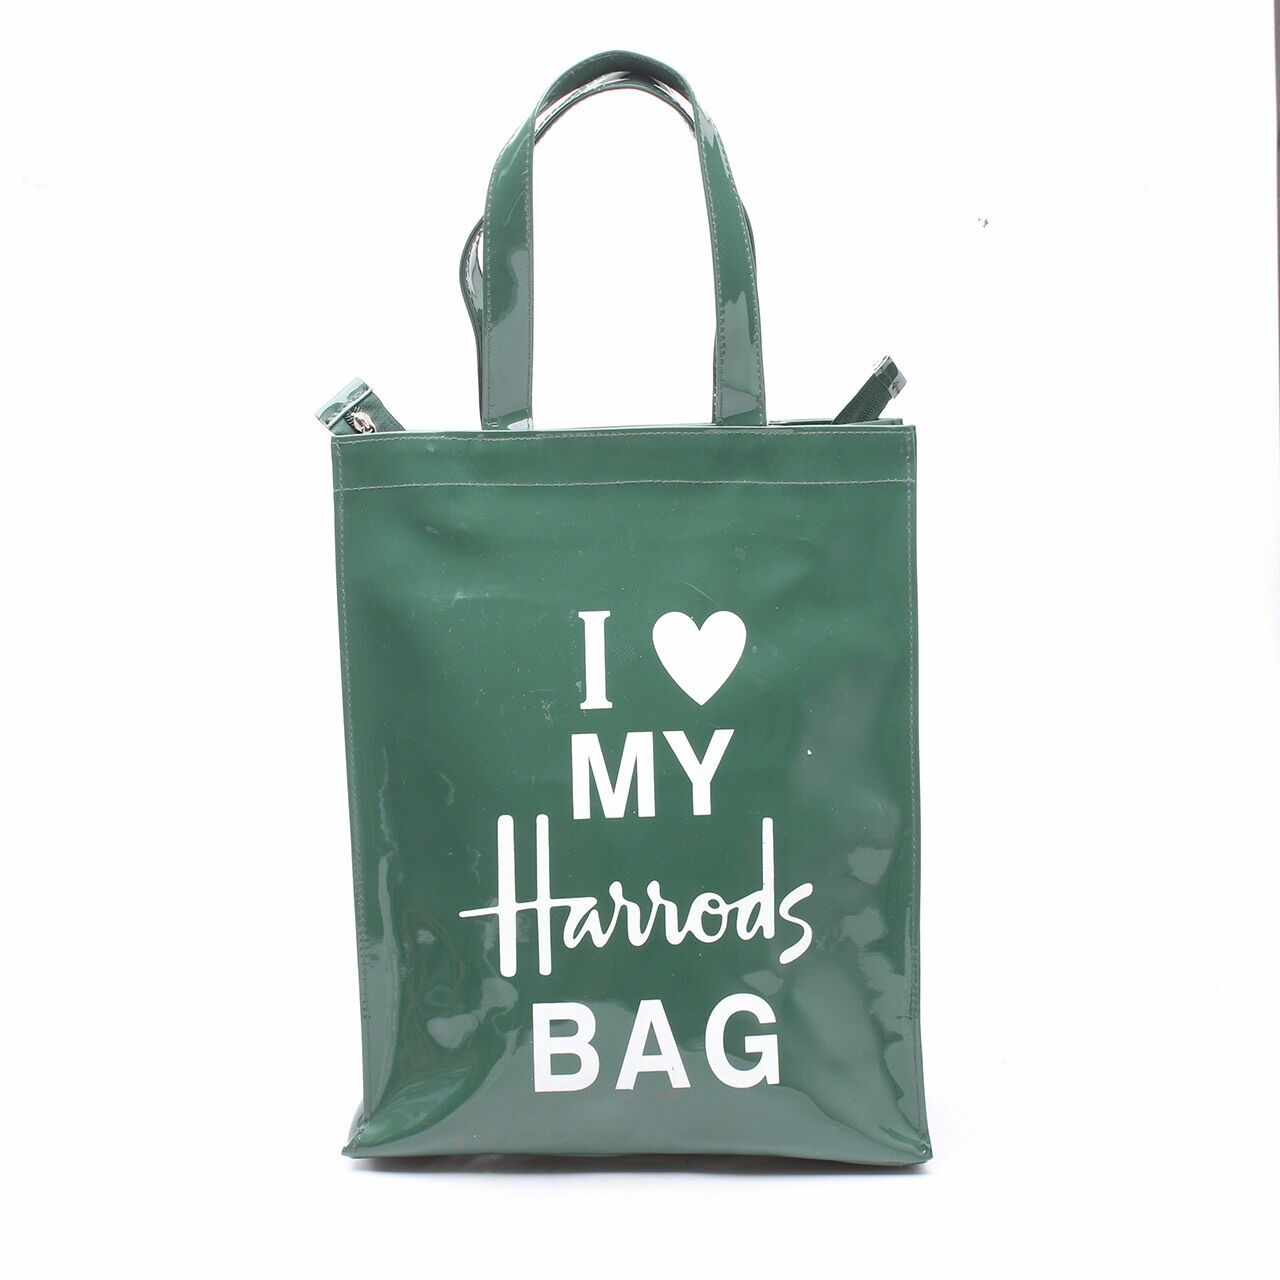 Harrods Green Tote Bag